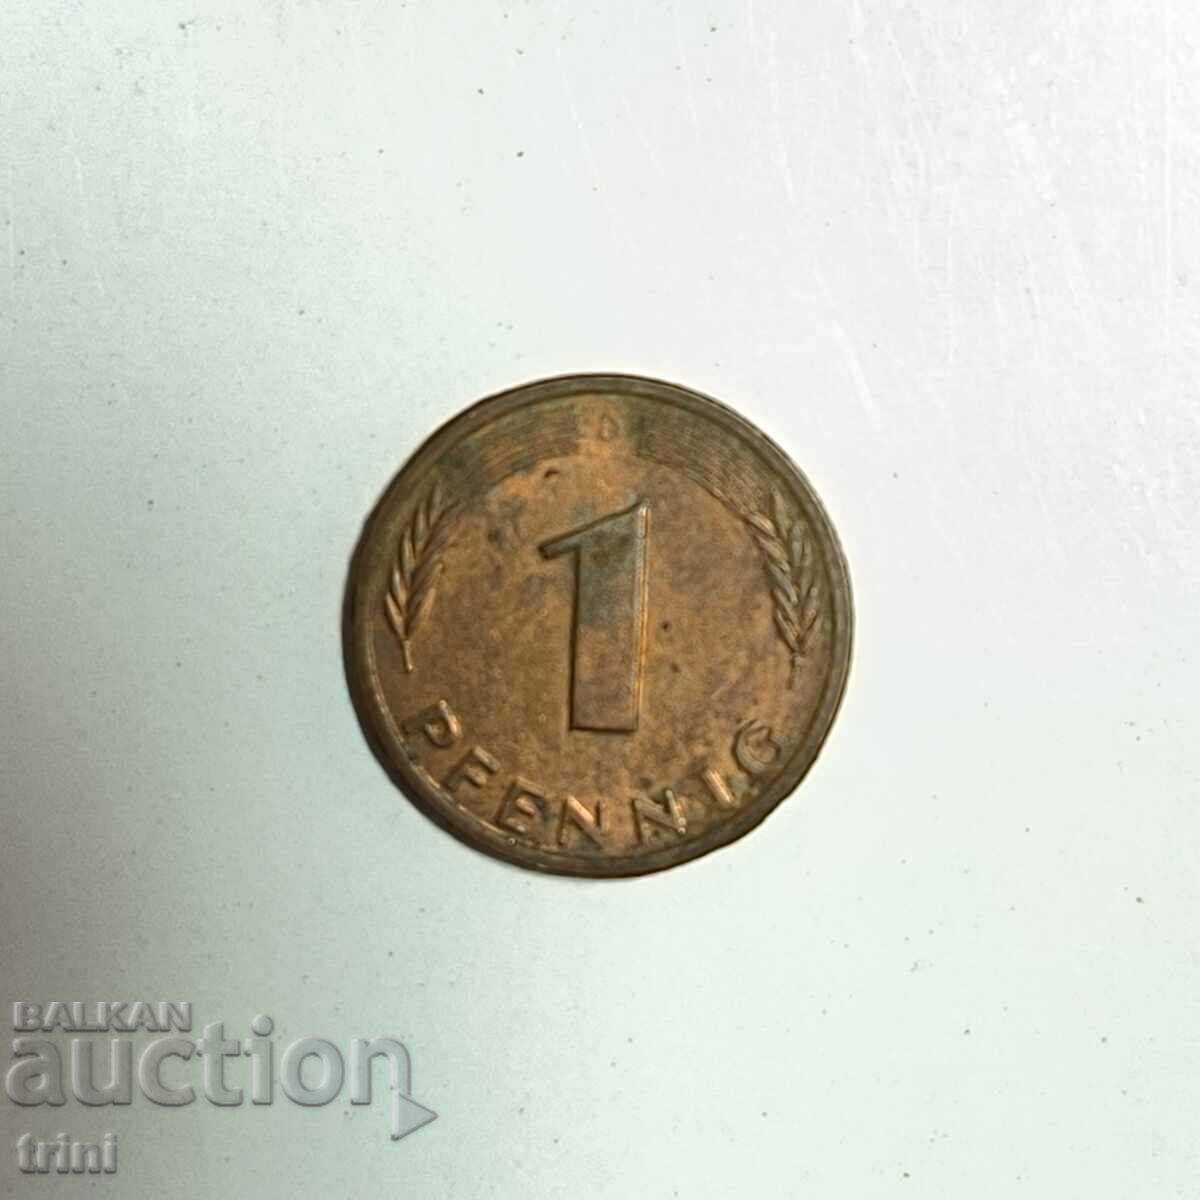 Germania 1 pfennig 1986 anul „D” - Munchen e186